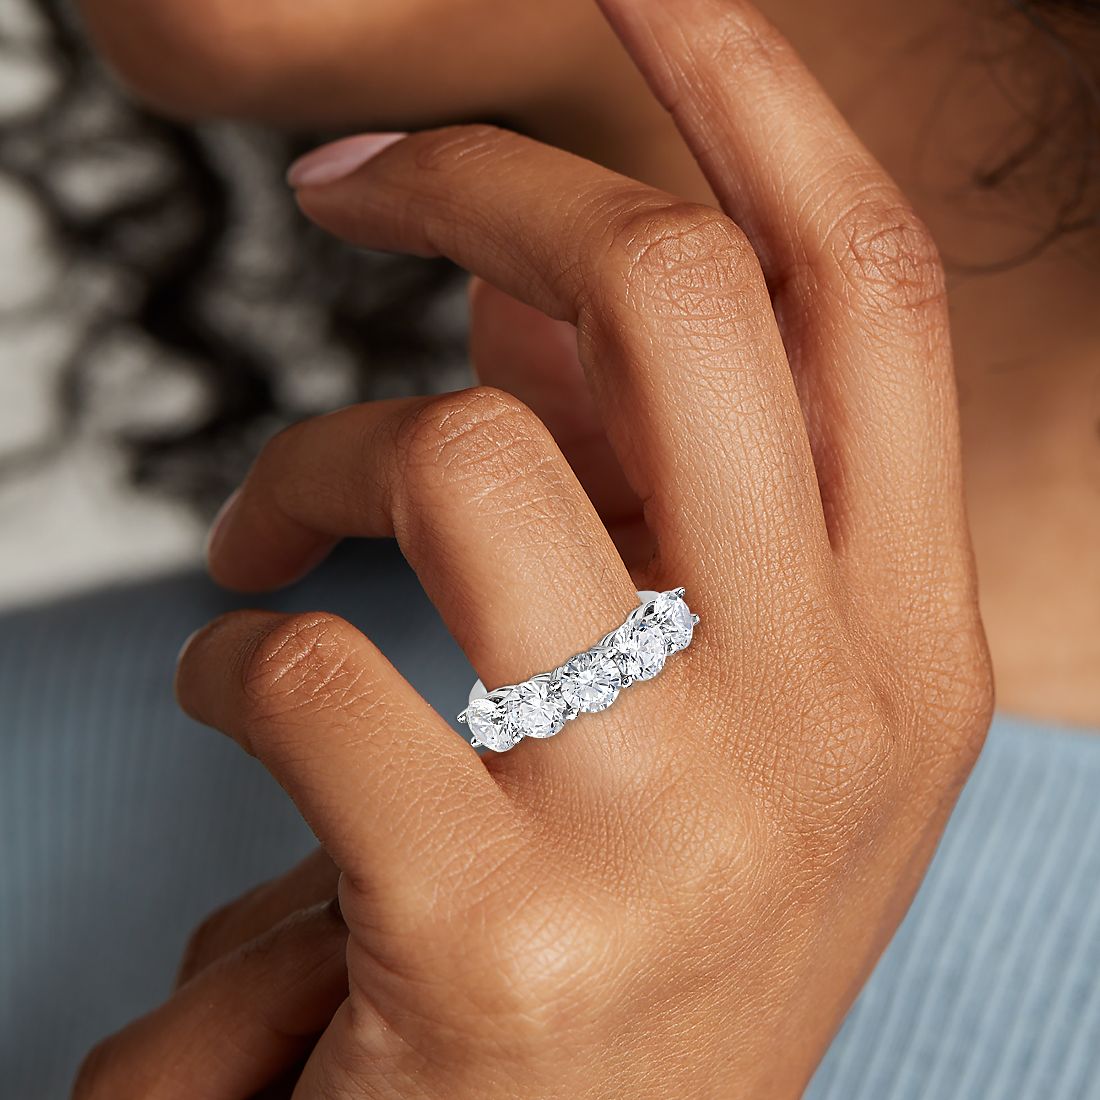 Round Diamond Wedding Engagement Ring Band VS1 E 0.27 Ct White Gold Appraisal 